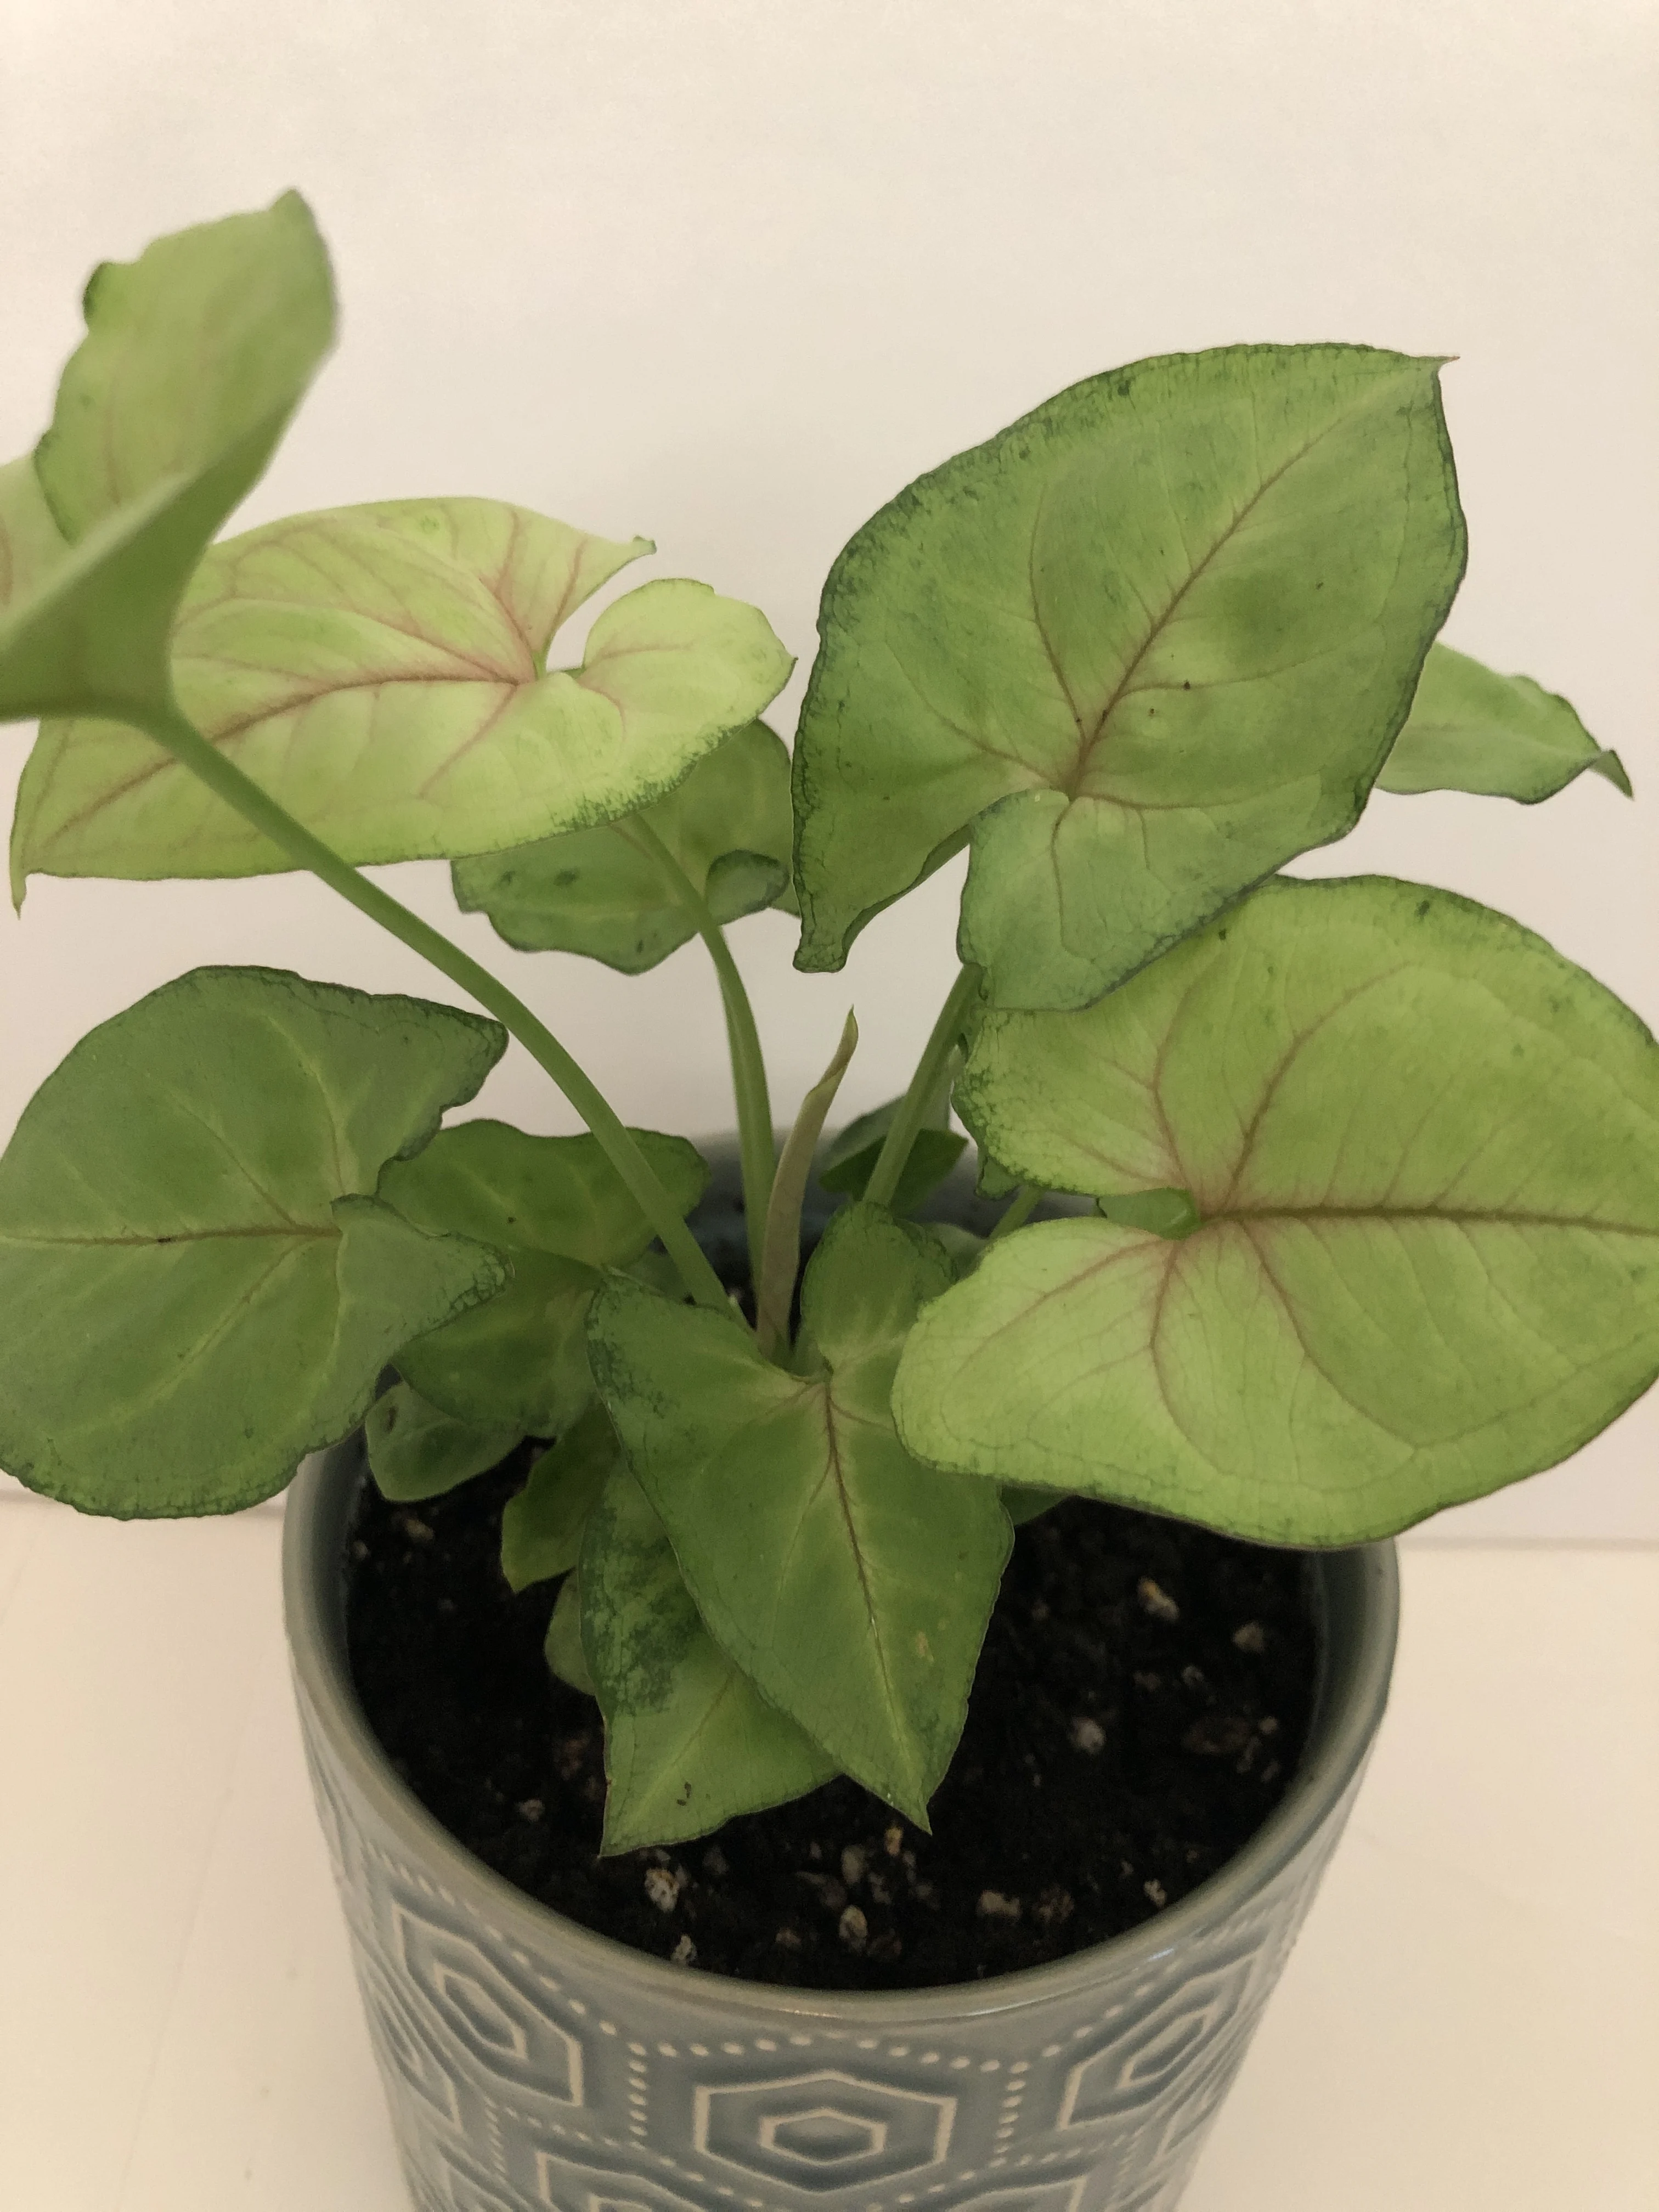 Arrowhead plant 'Berry allusion'